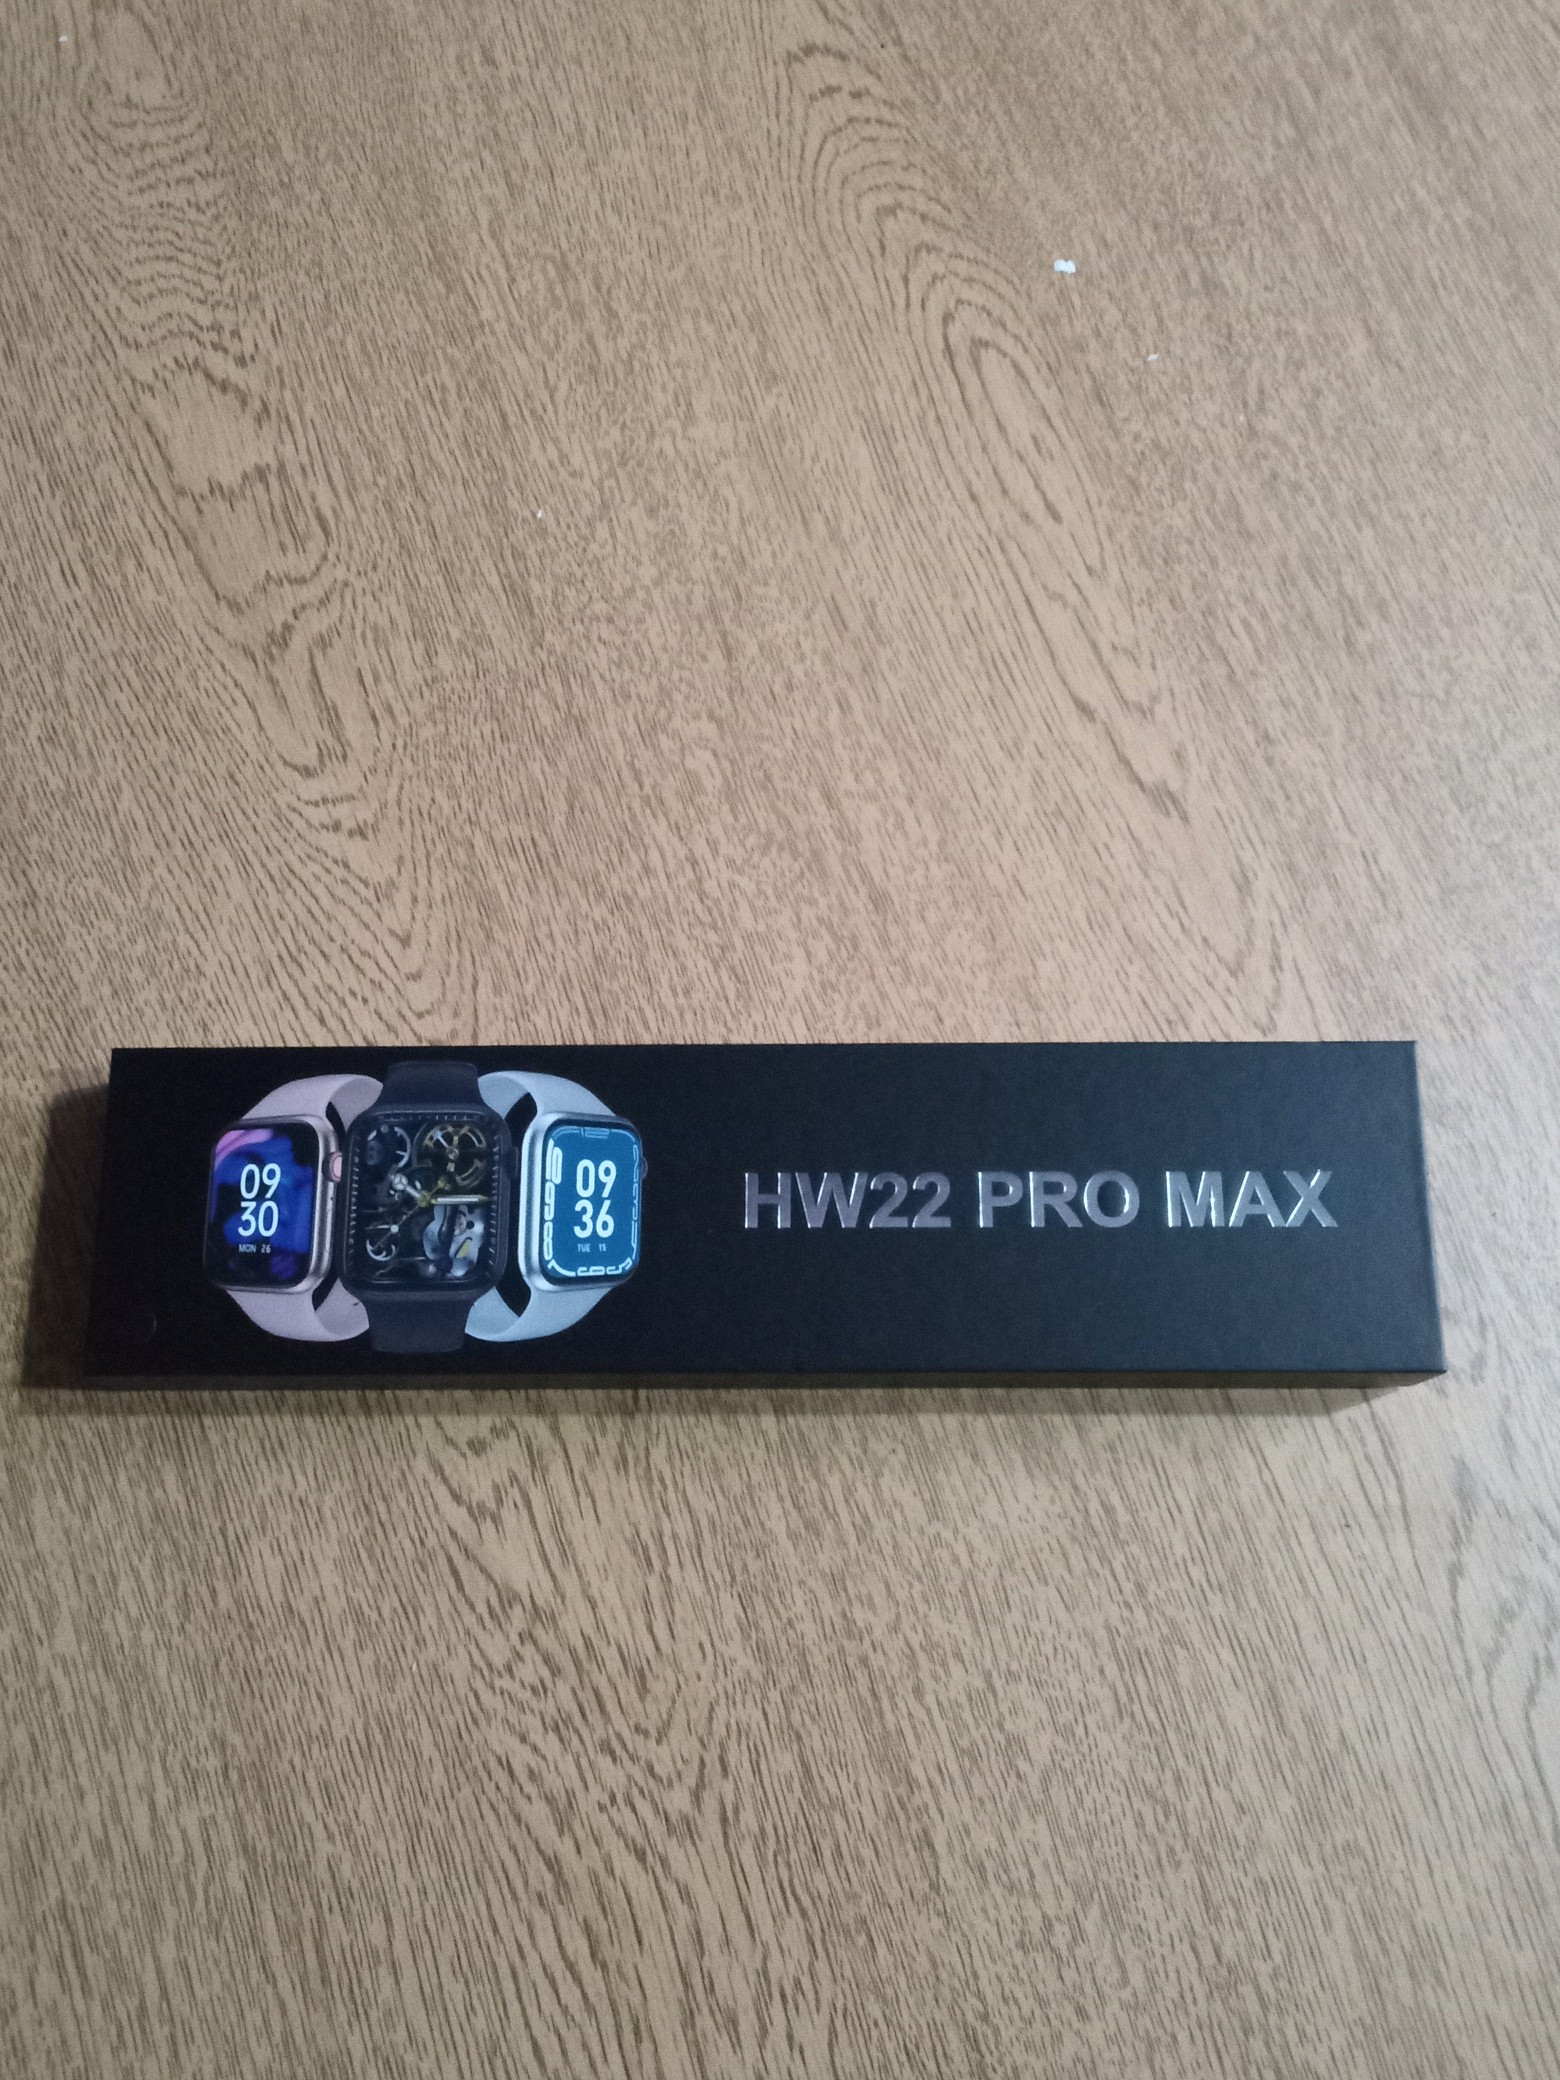 accesorios para electronica - Reloj Smart watch HW22 Pro Max Serie 7 